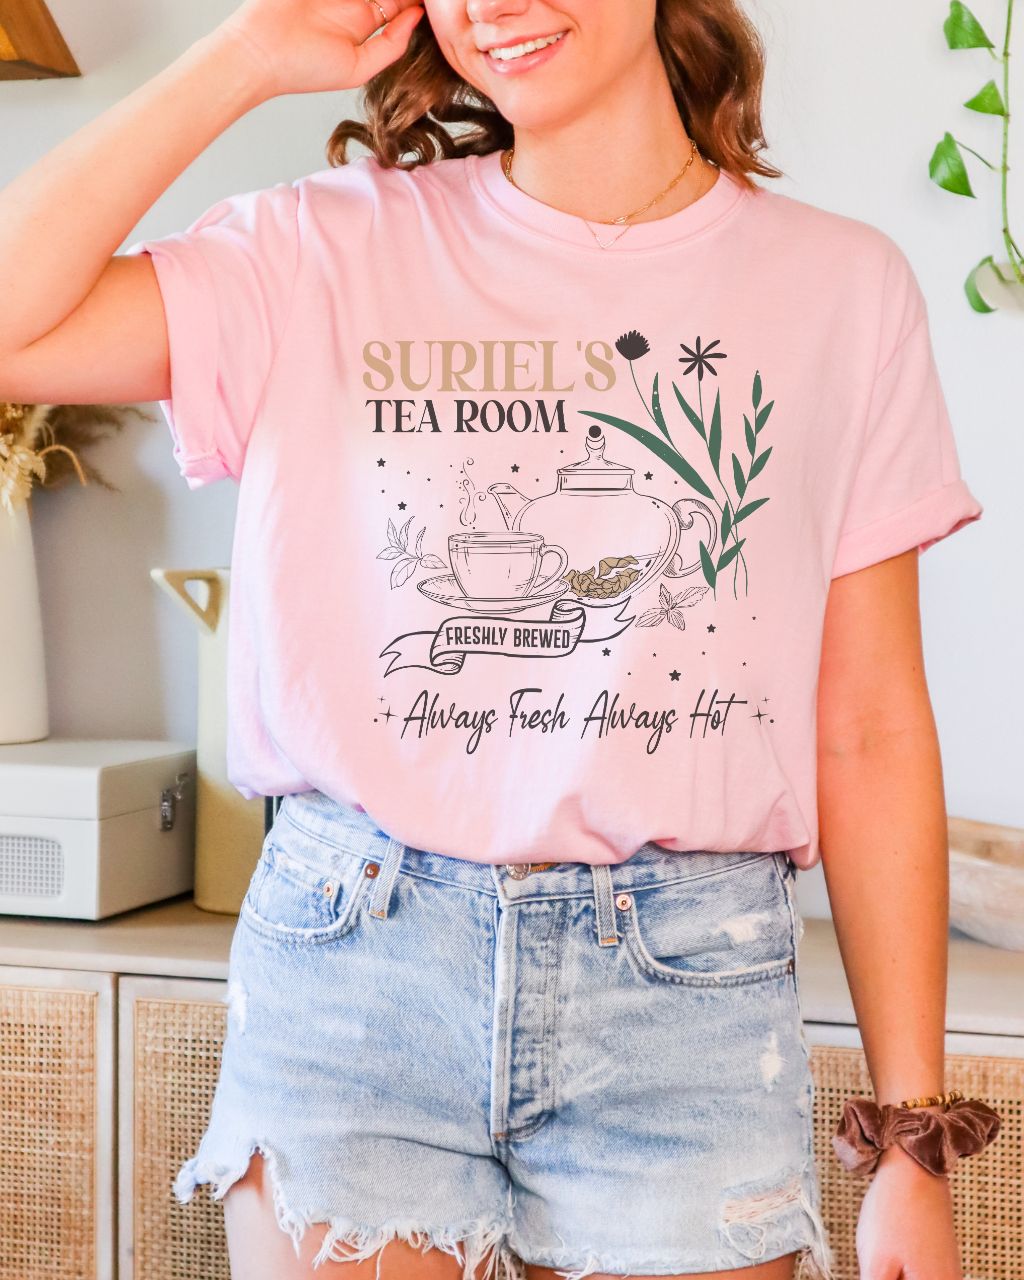 Suriel's Tea Room Comfort Colors T-Shirt - ACOTAR Sarah J. Maas Inspired Tee